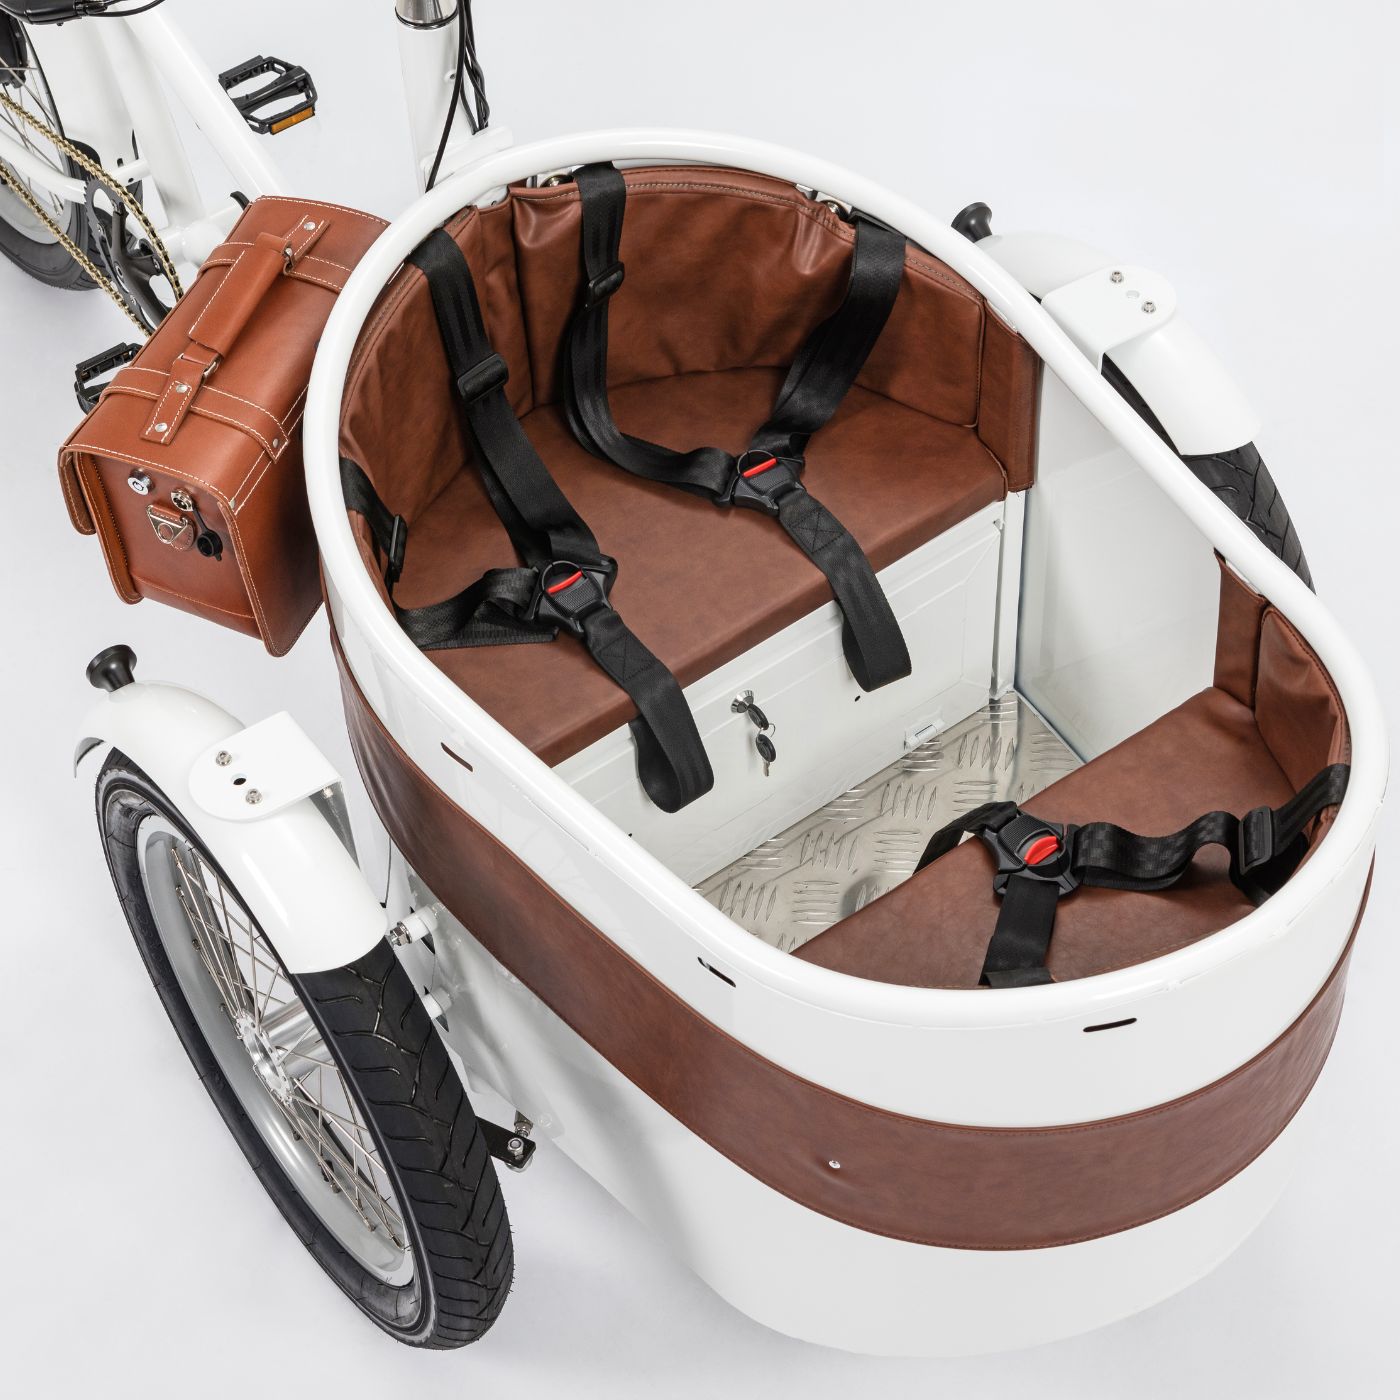 Rayvolt Trixie Cargo Bike - Vintage Style for Urban Families